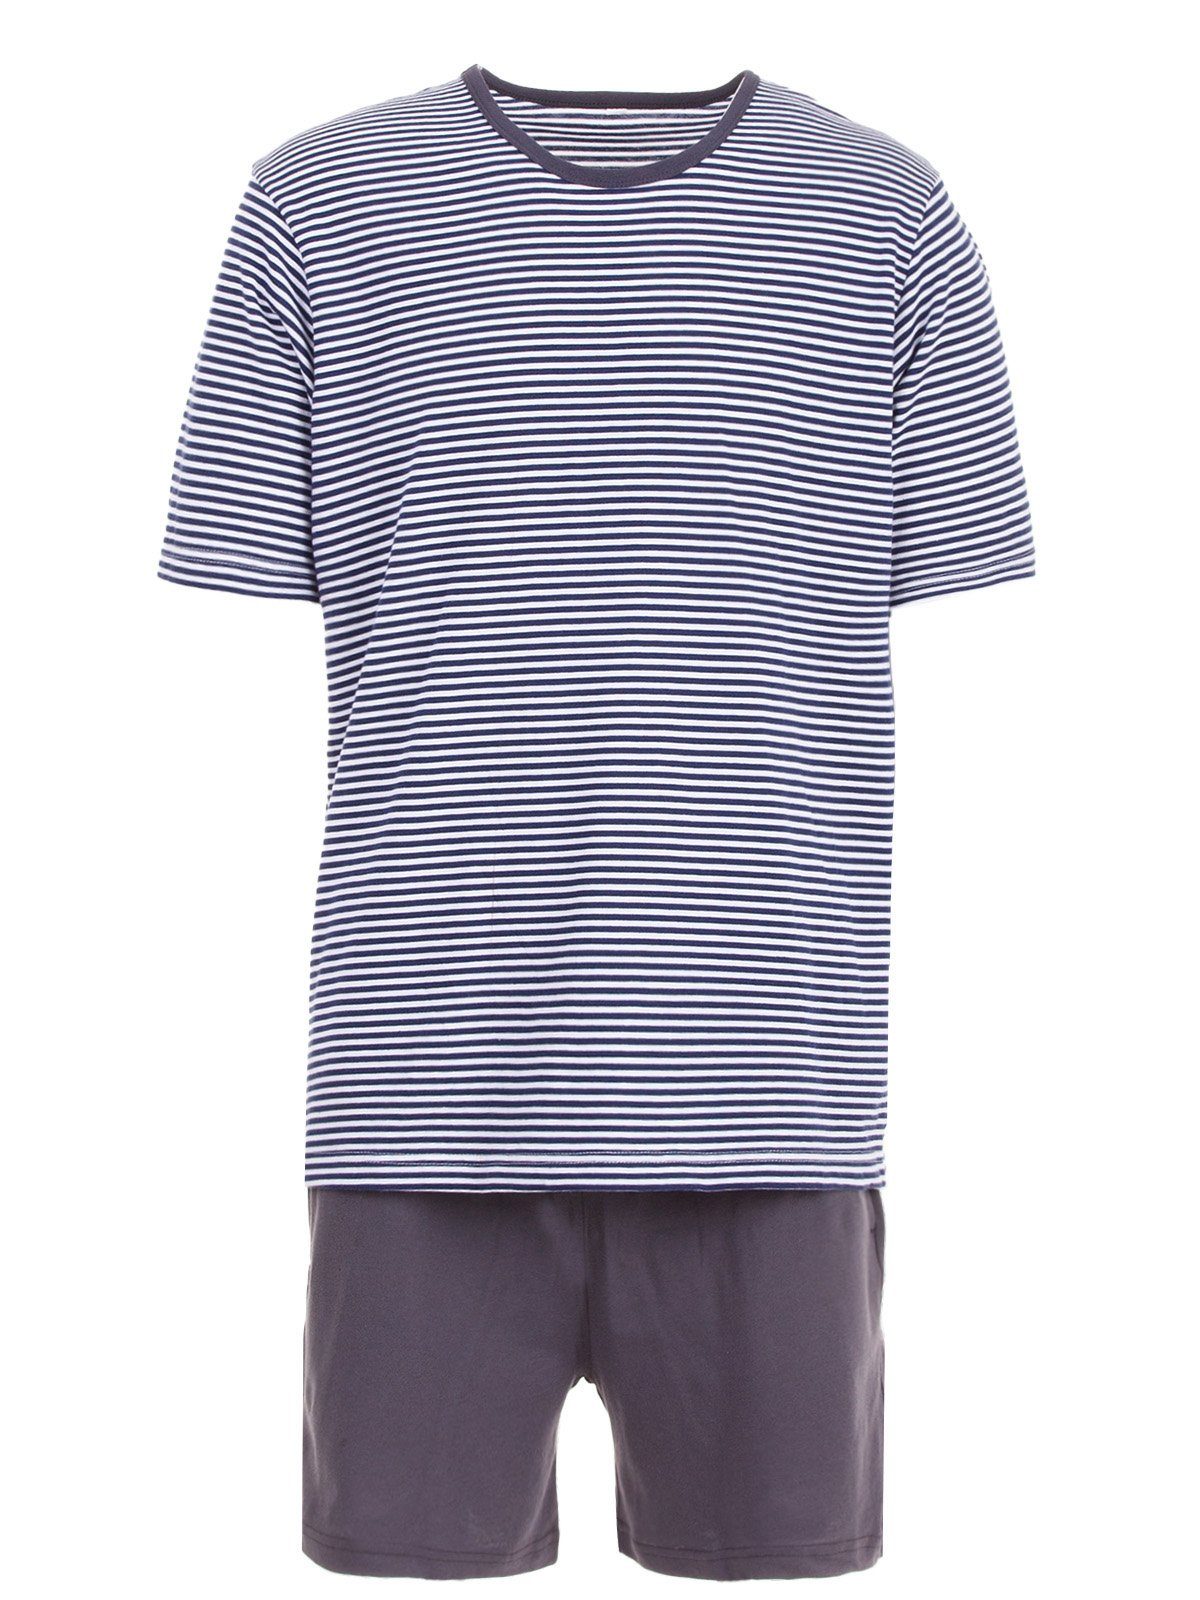 Henry Terre Schlafanzug Pyjama Set Shorty - Gestreift navy